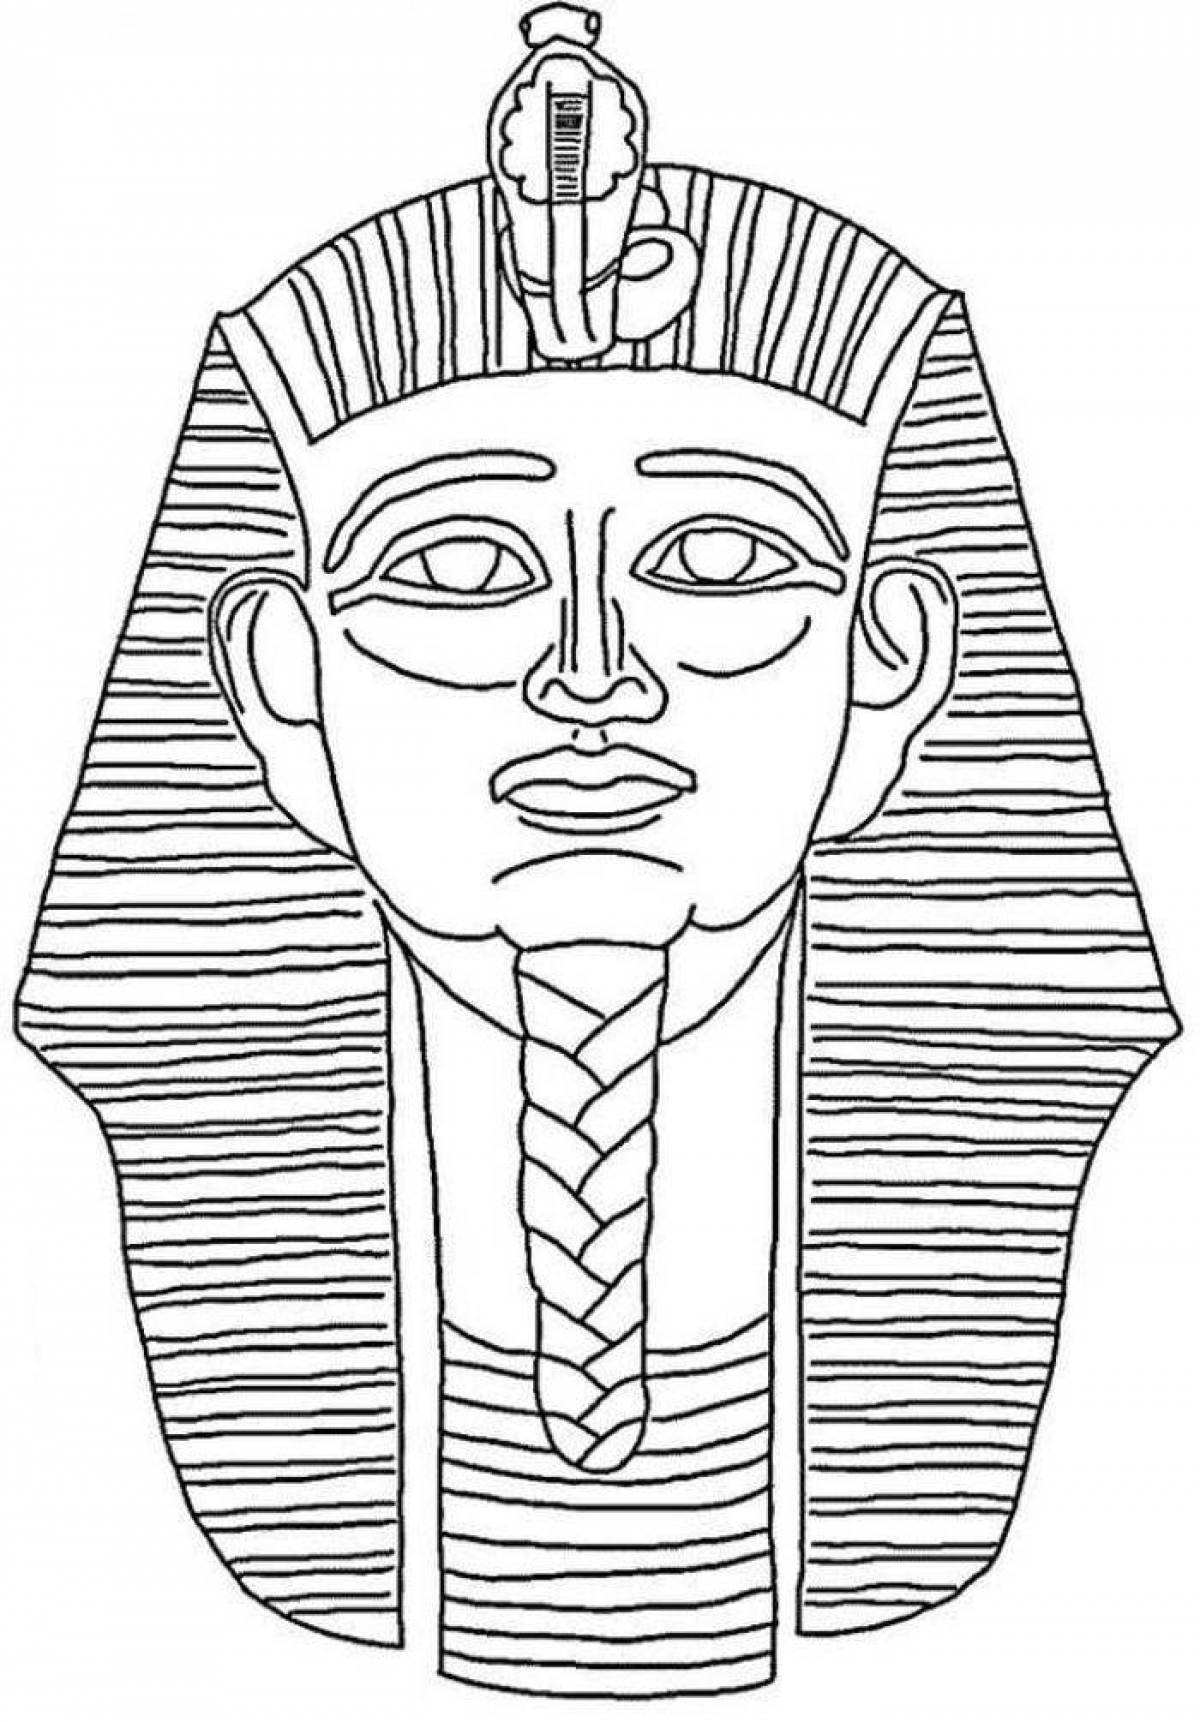 Coloring page glamor pharaoh